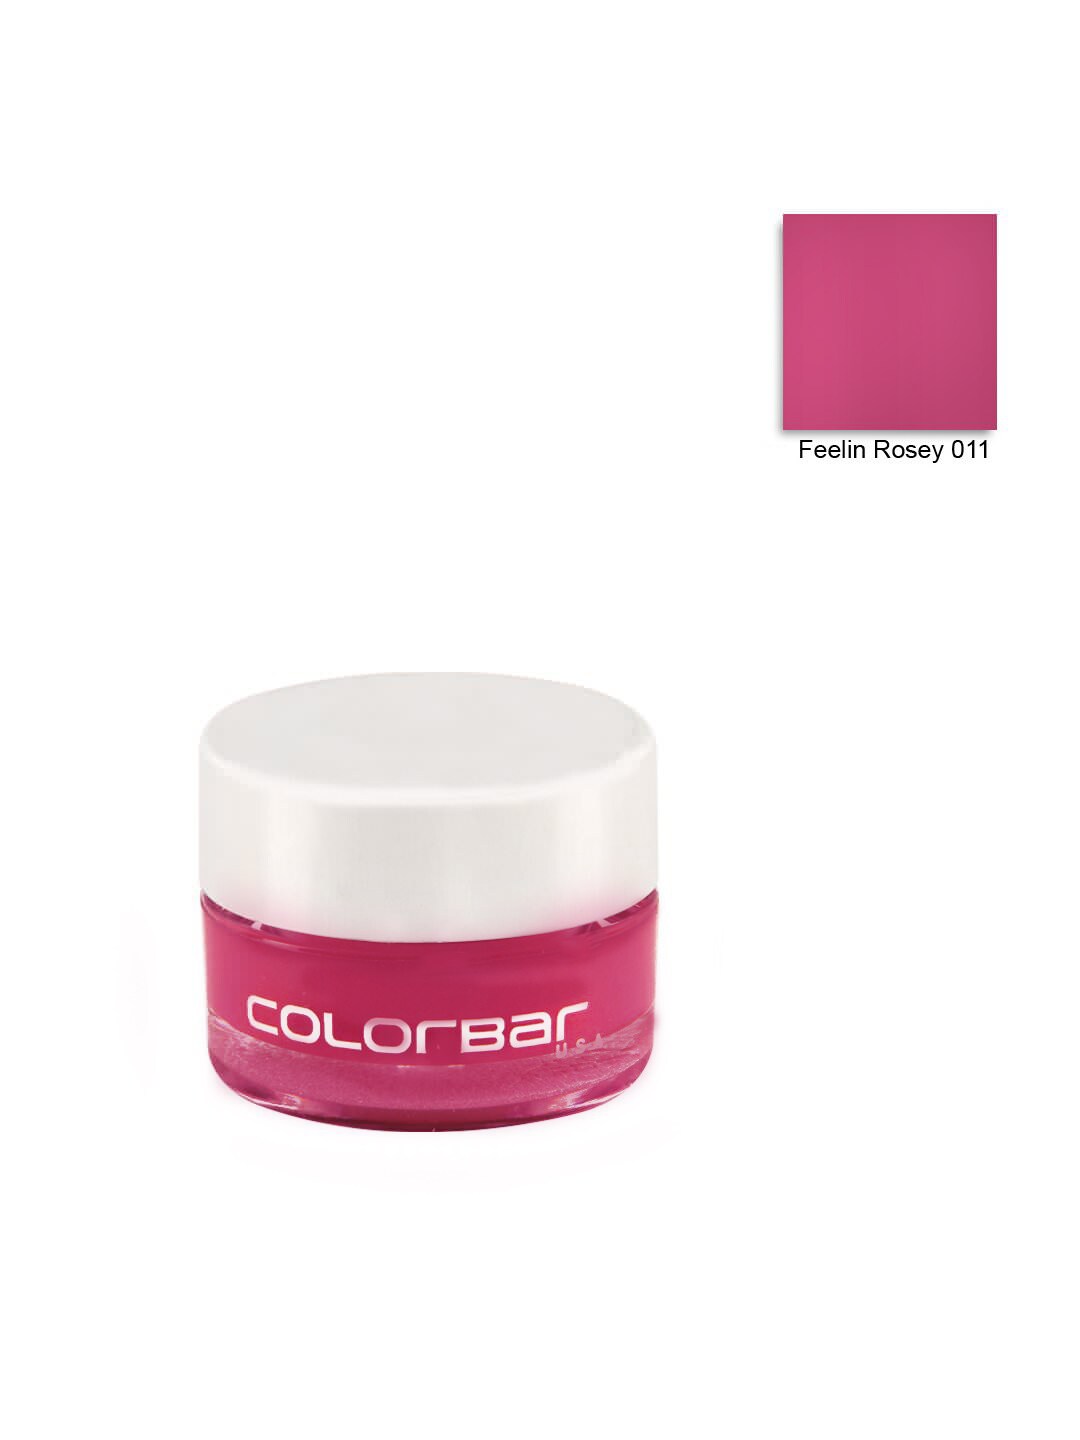 Colorbar Feelin Rosey Lip Pot 011